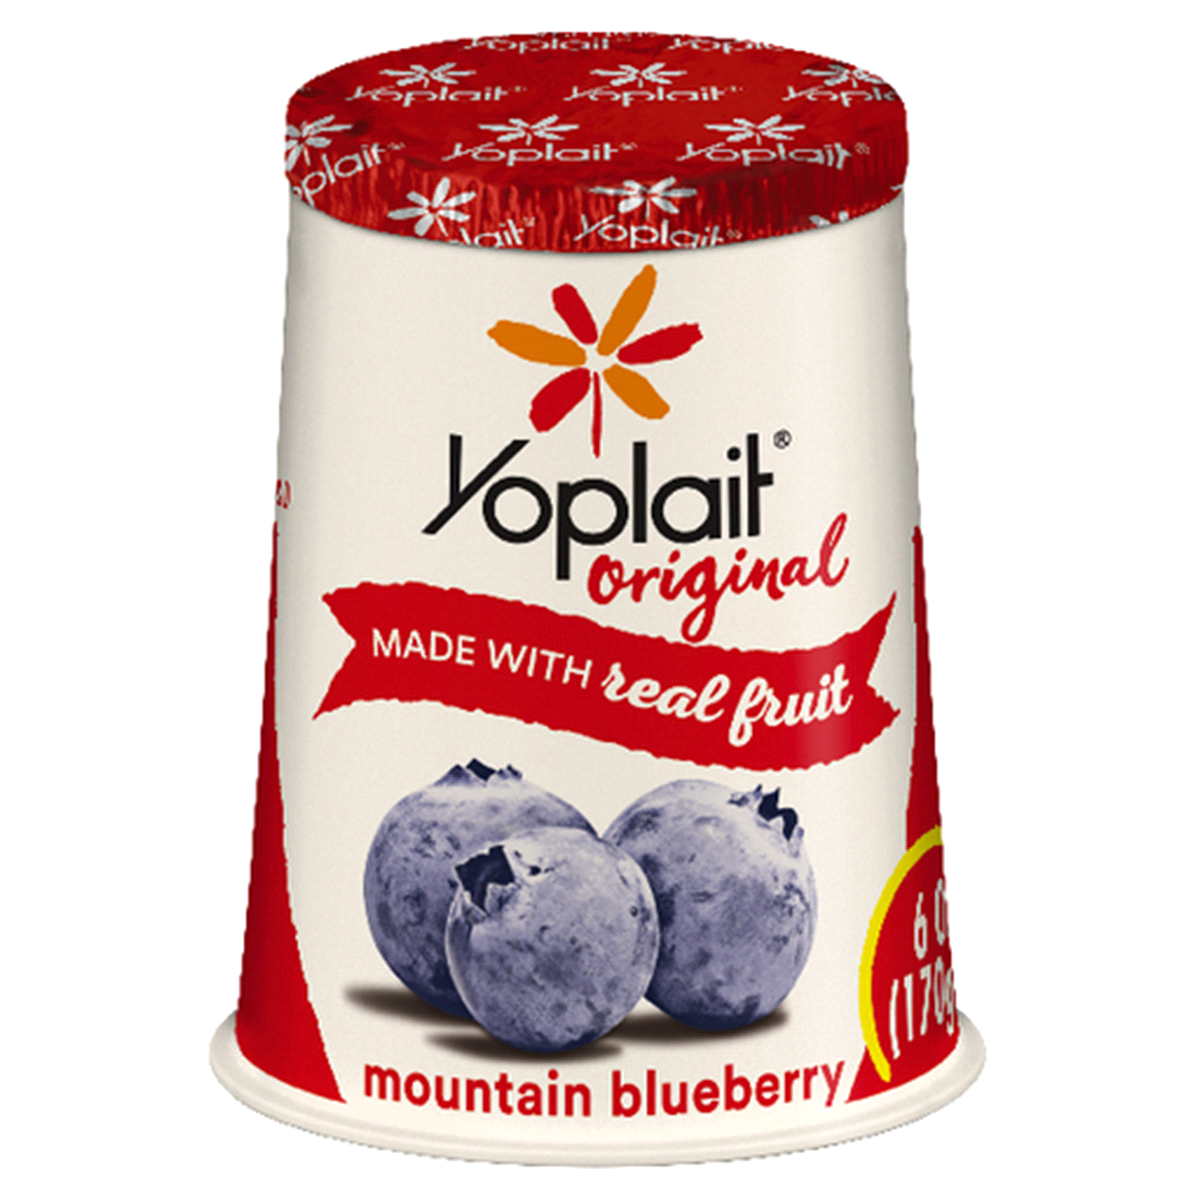 Yogurt Original (Only Select Flavors)